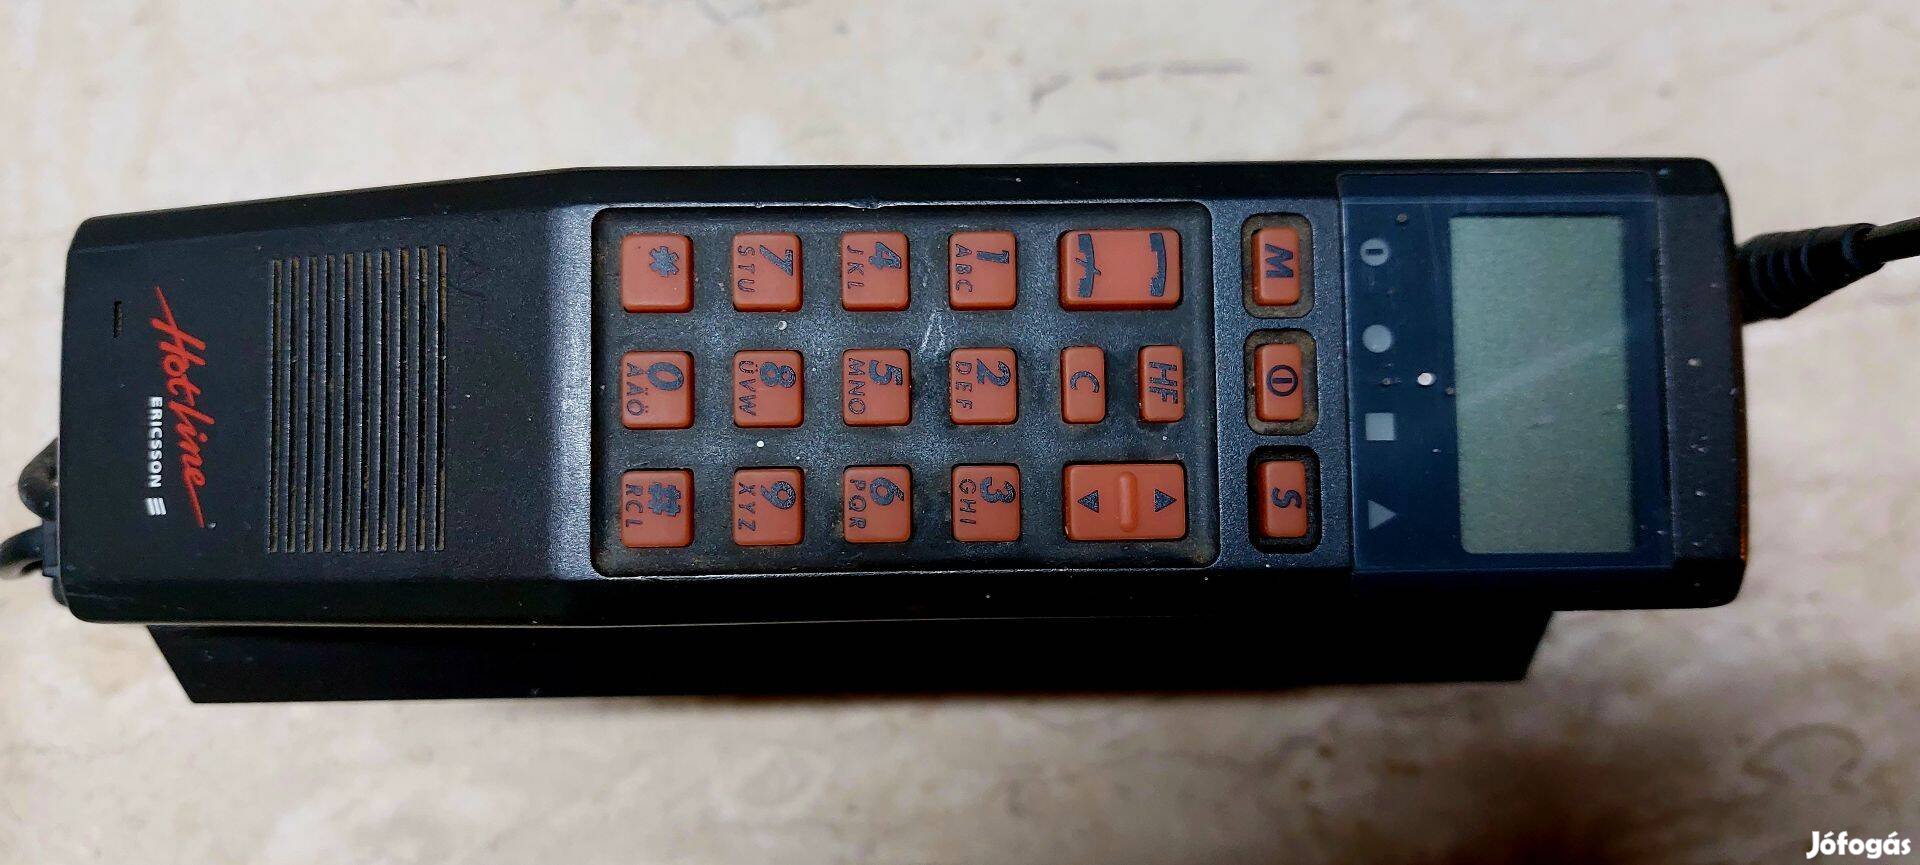 Ericsson hotline combi 433 schrack vintage mobiltelefon